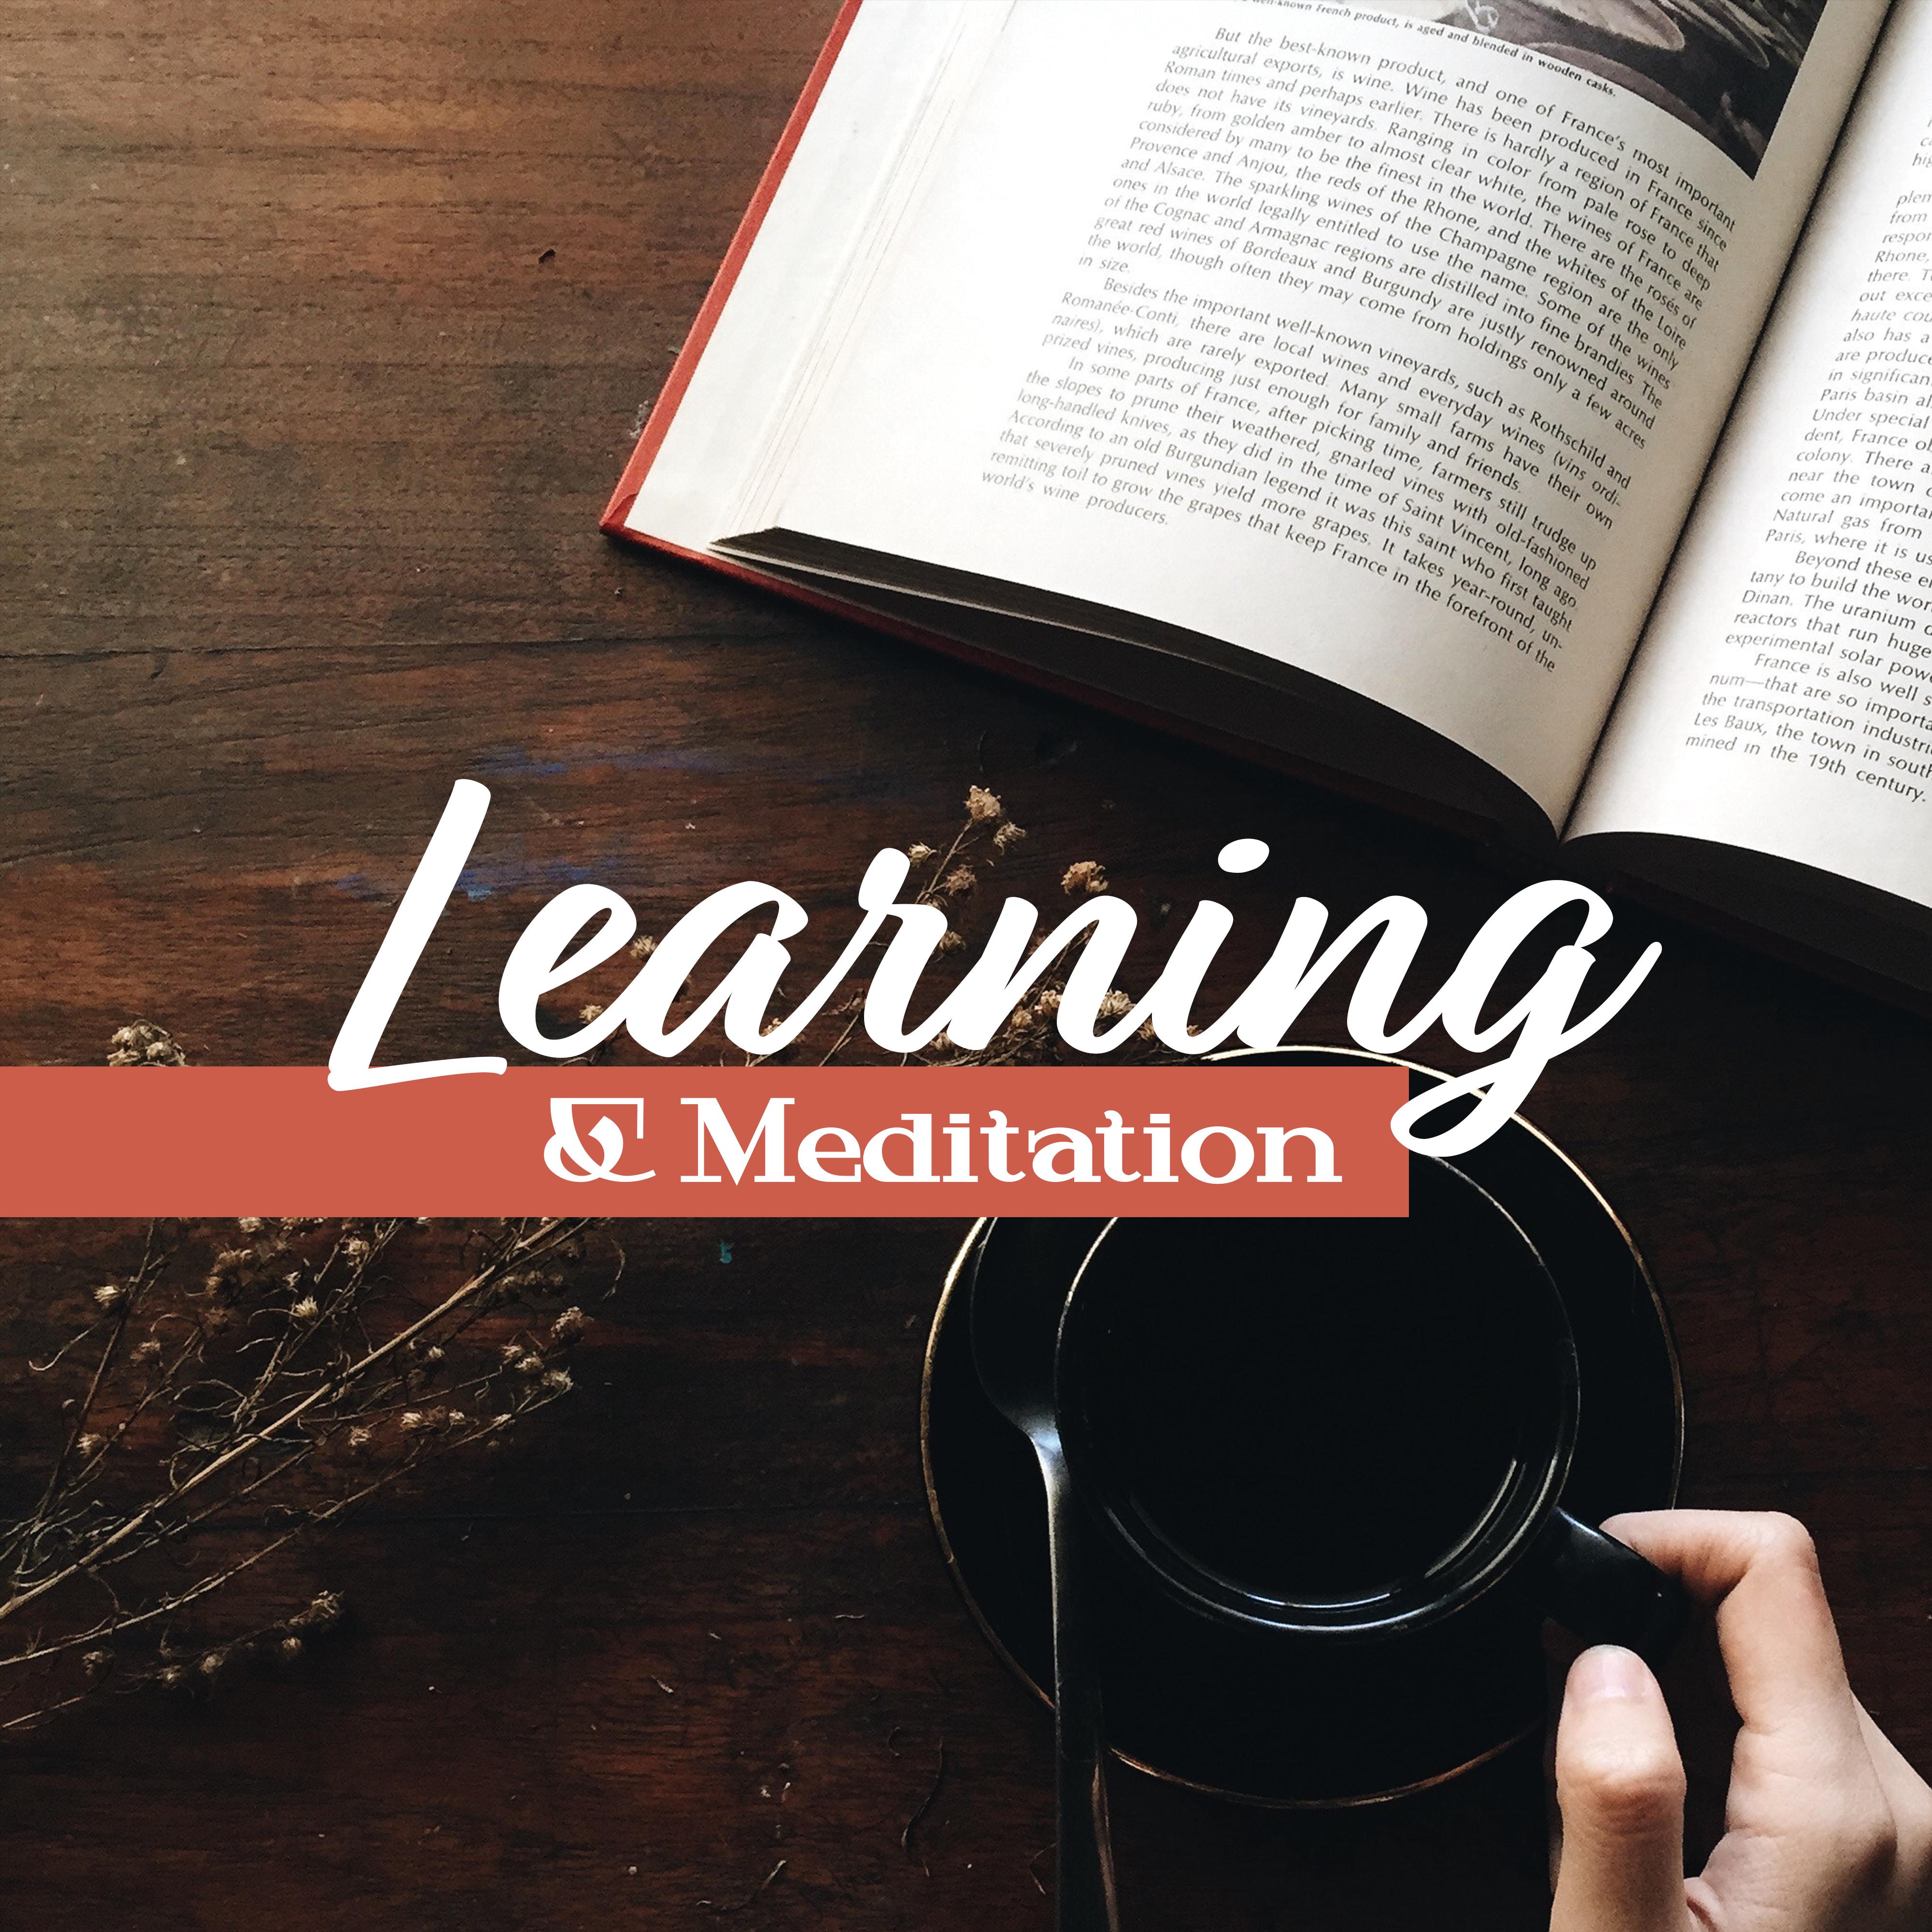 Learning & Meditation